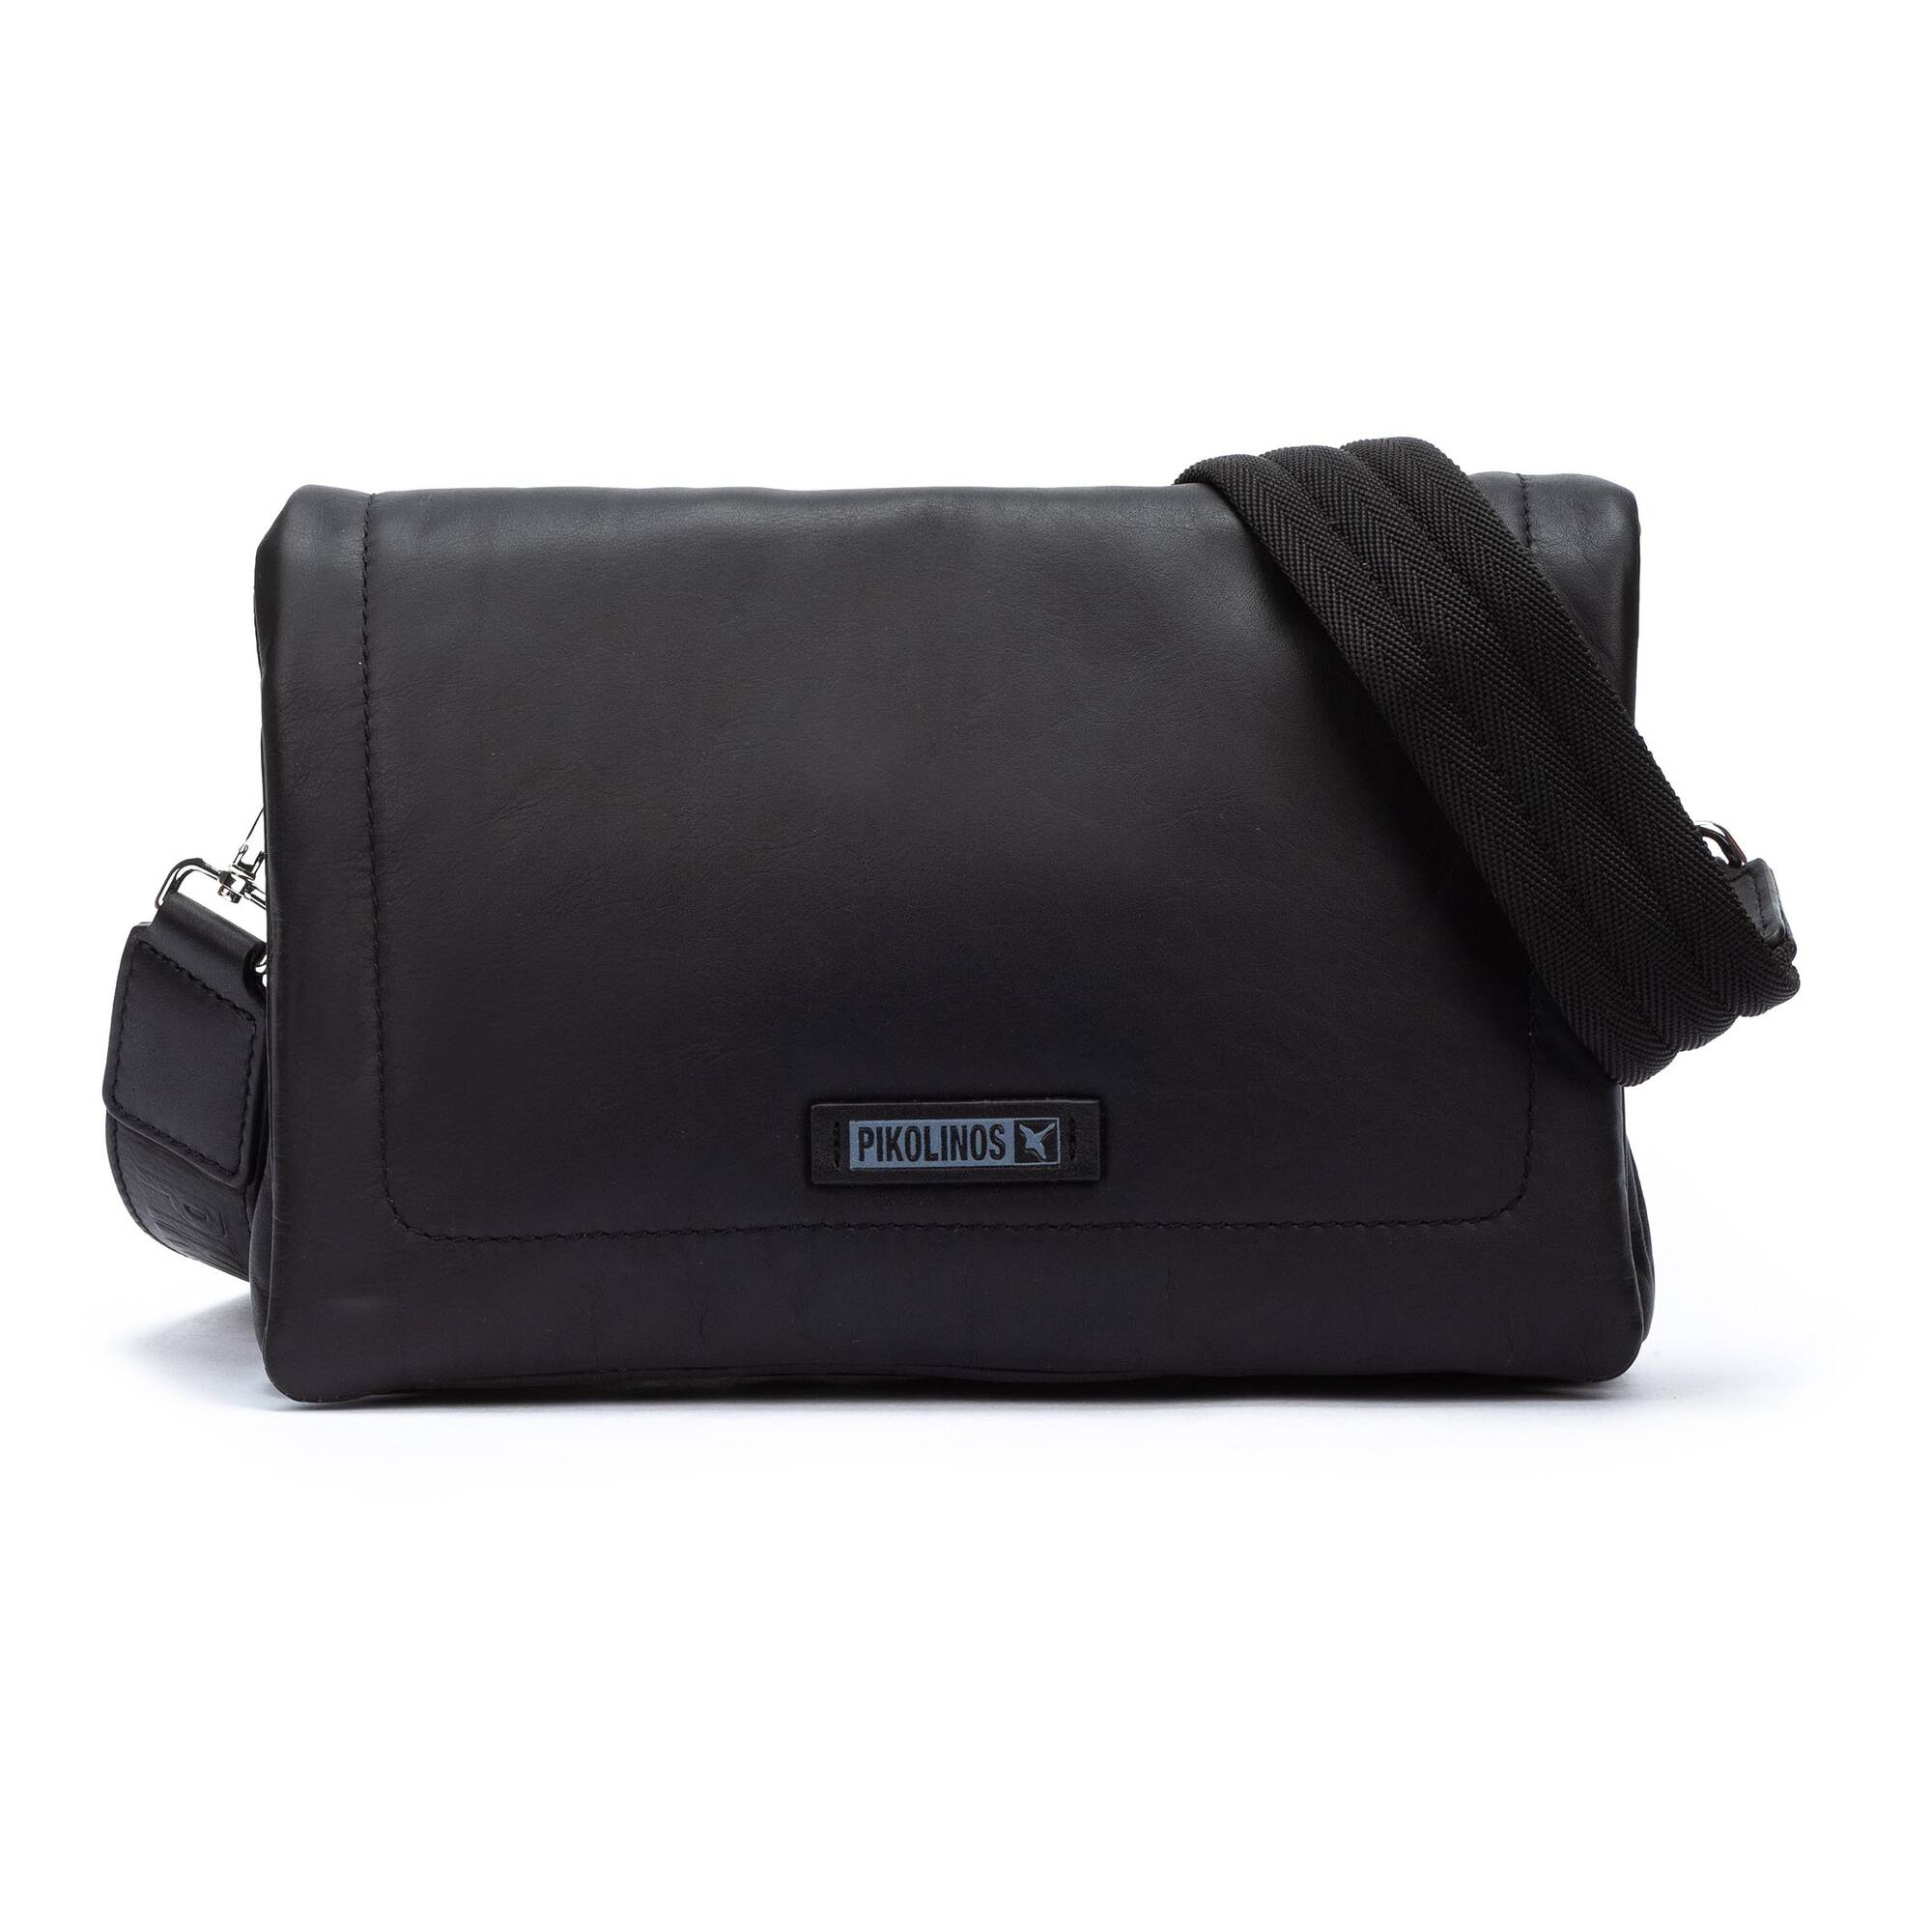 Pikolinos Alcudia Leather Bag Color: Black 